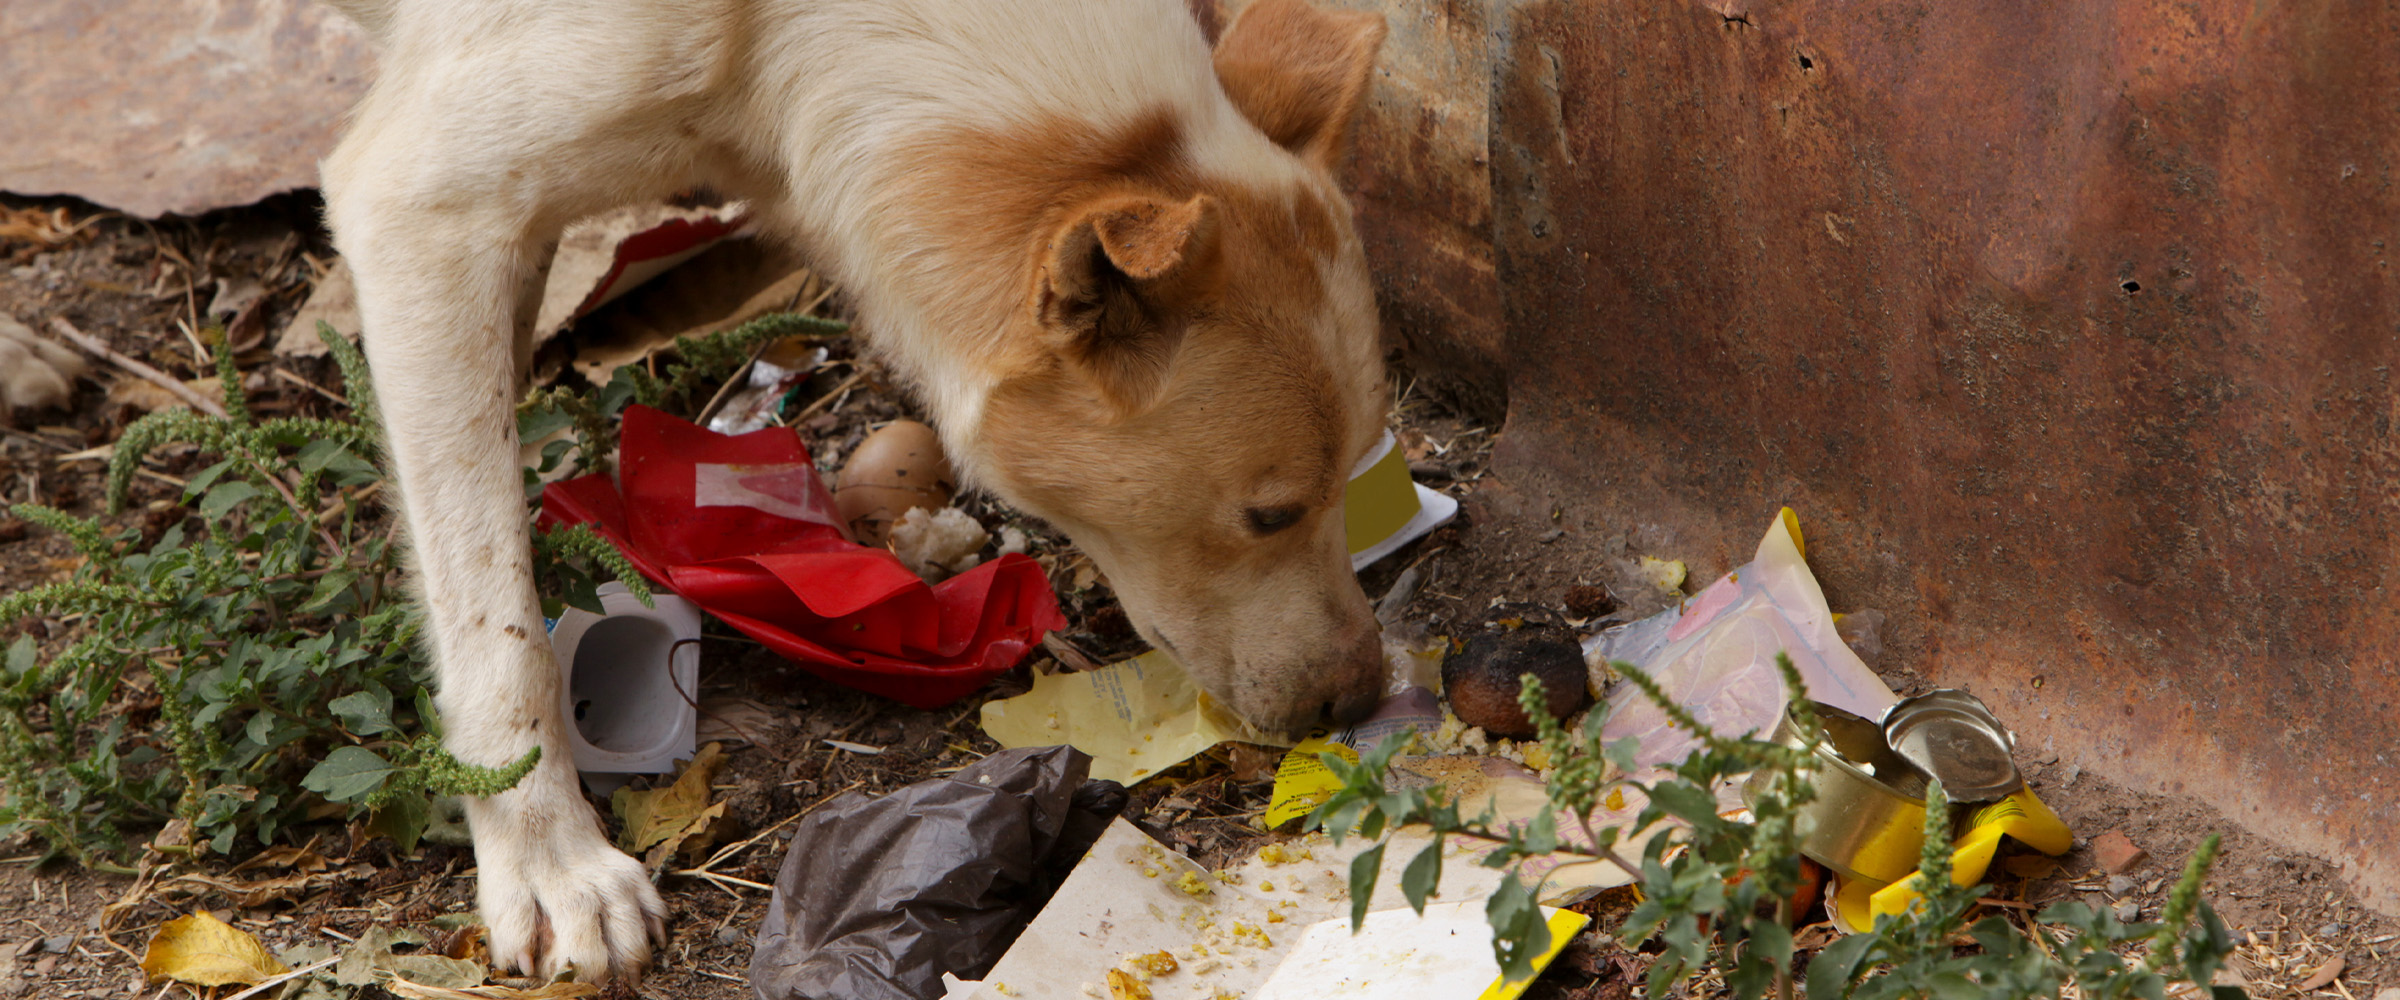 d_Teach dog to not eat trash_1-1